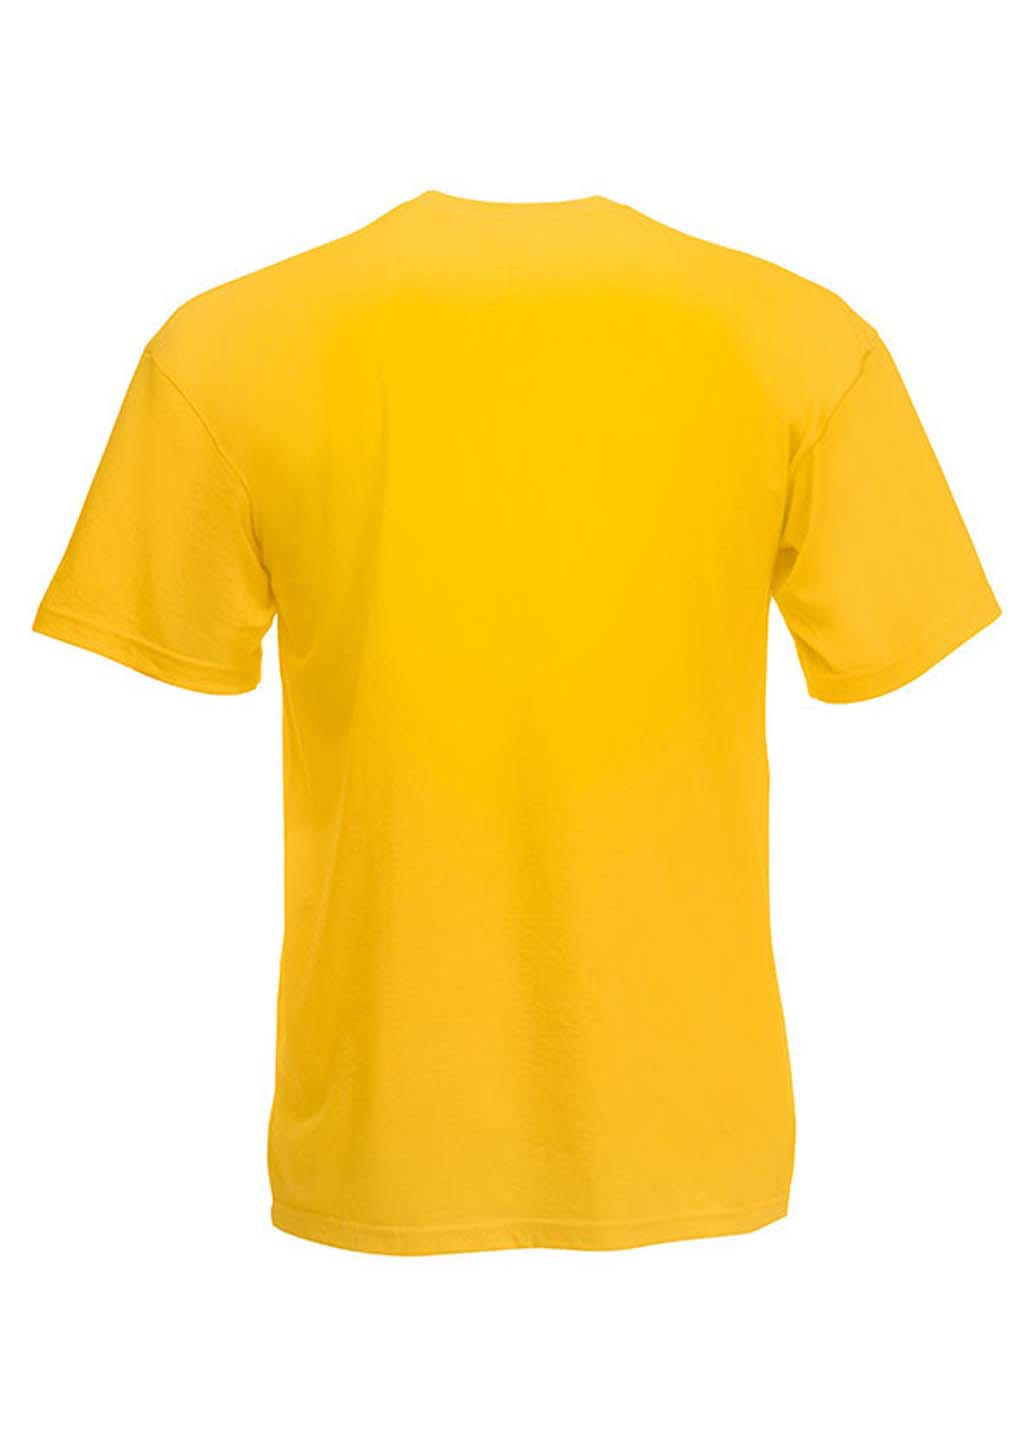 Жовта демісезонна футболка Fruit of the Loom